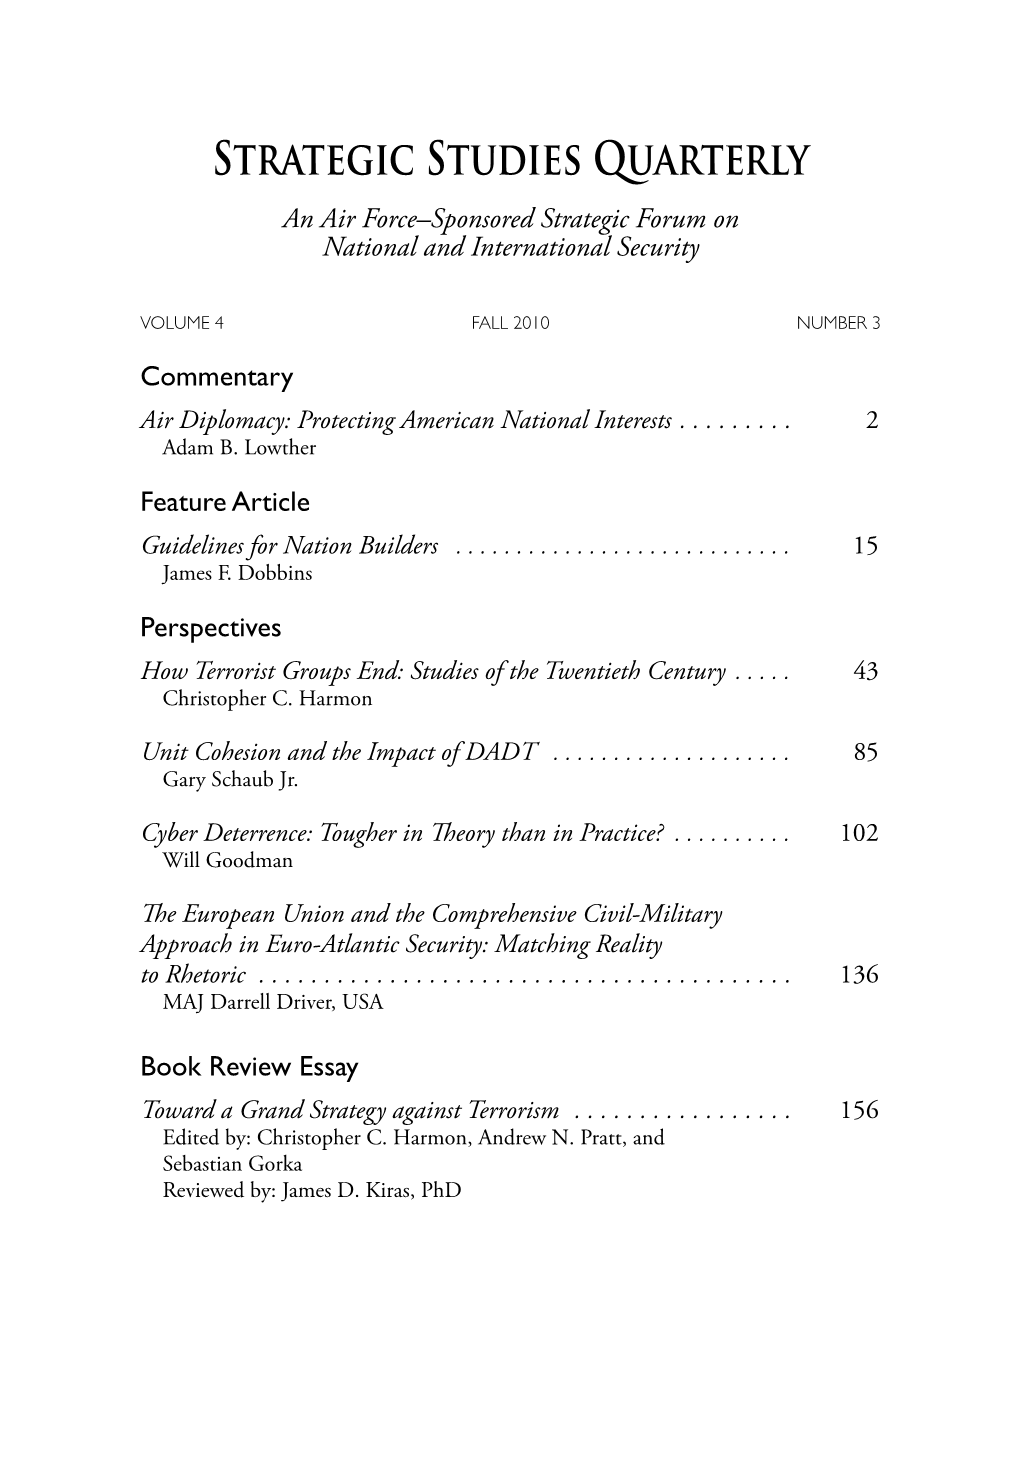 Strategic Studies Quarterly, Fall 2010, Vol. 4, No. 3